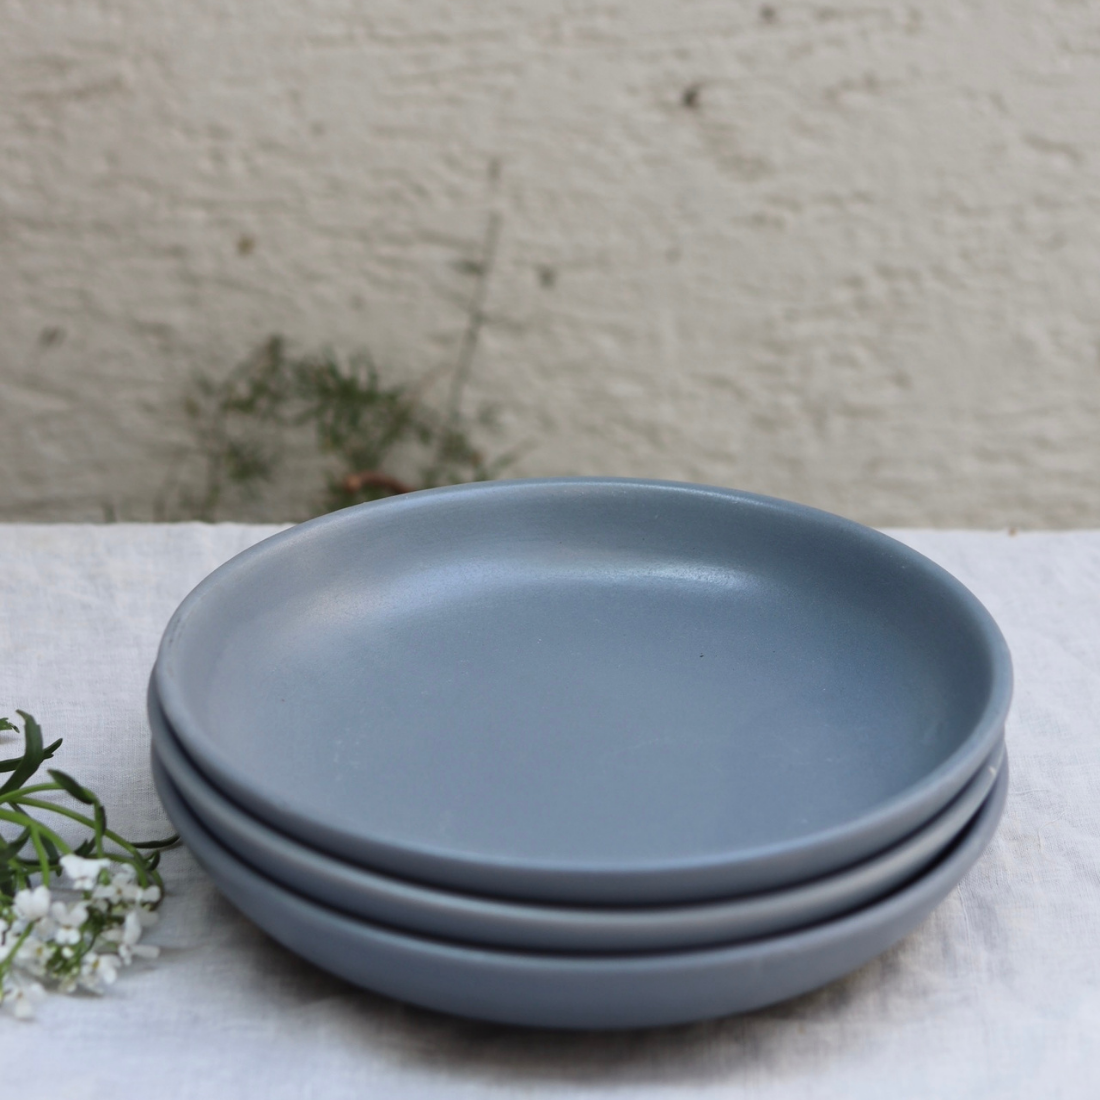 Handmade ceramic grey pasta plates 